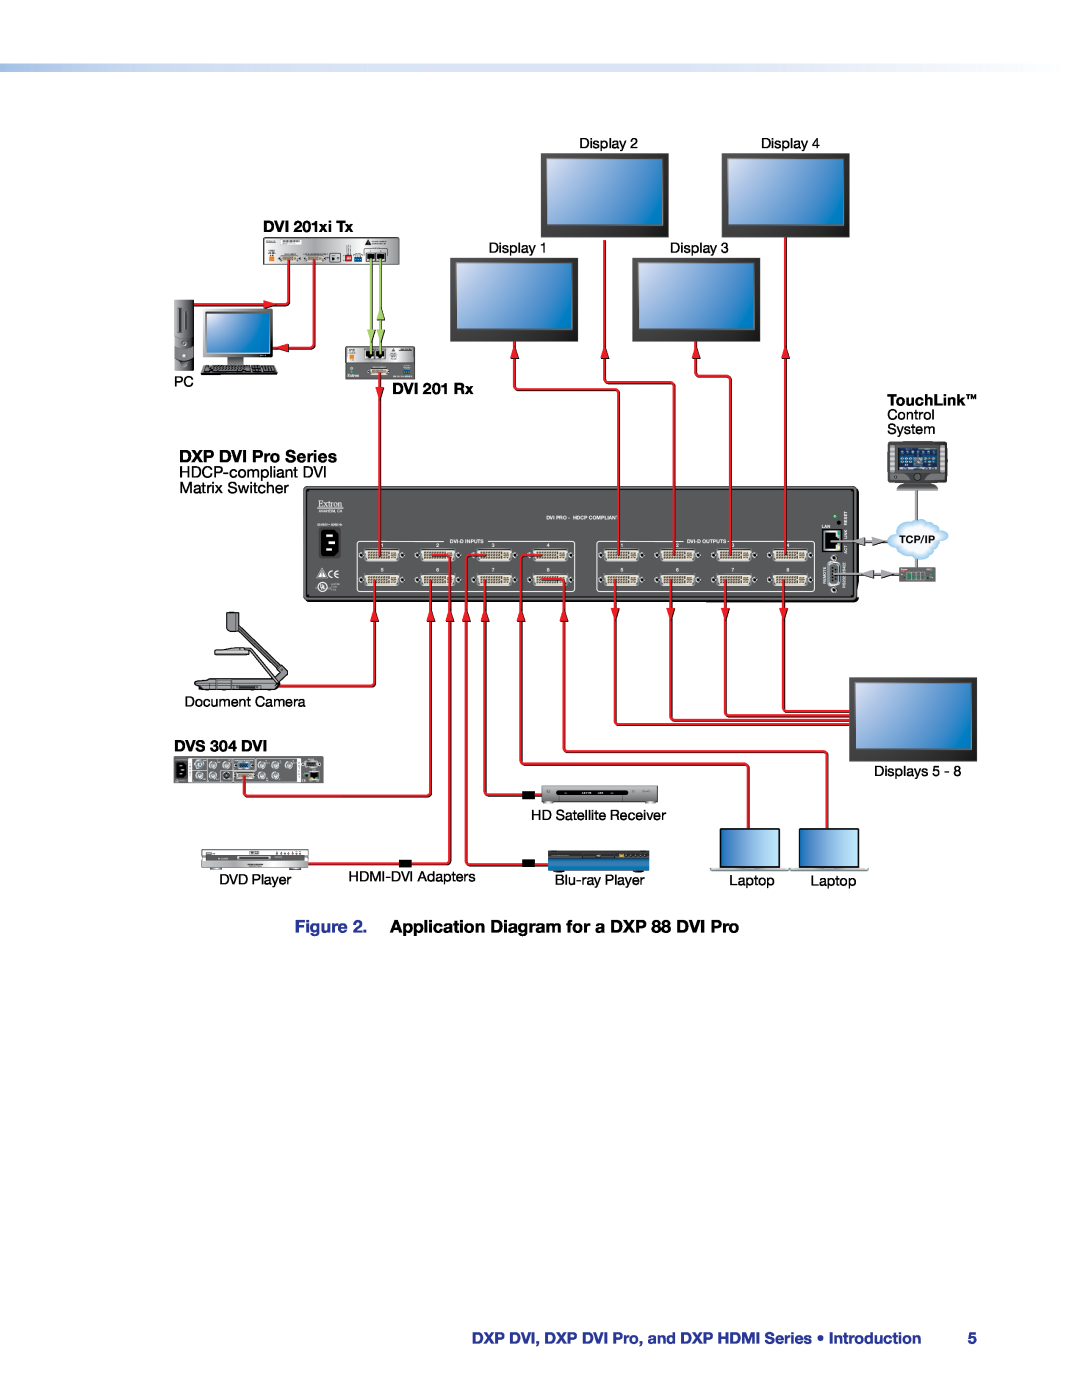 Extron electronic DXP DVI Pro Series, Application Diagram for a DXP 88 DVI Pro, DVI 201xi Tx, DVI 201 Rx, TouchLink 